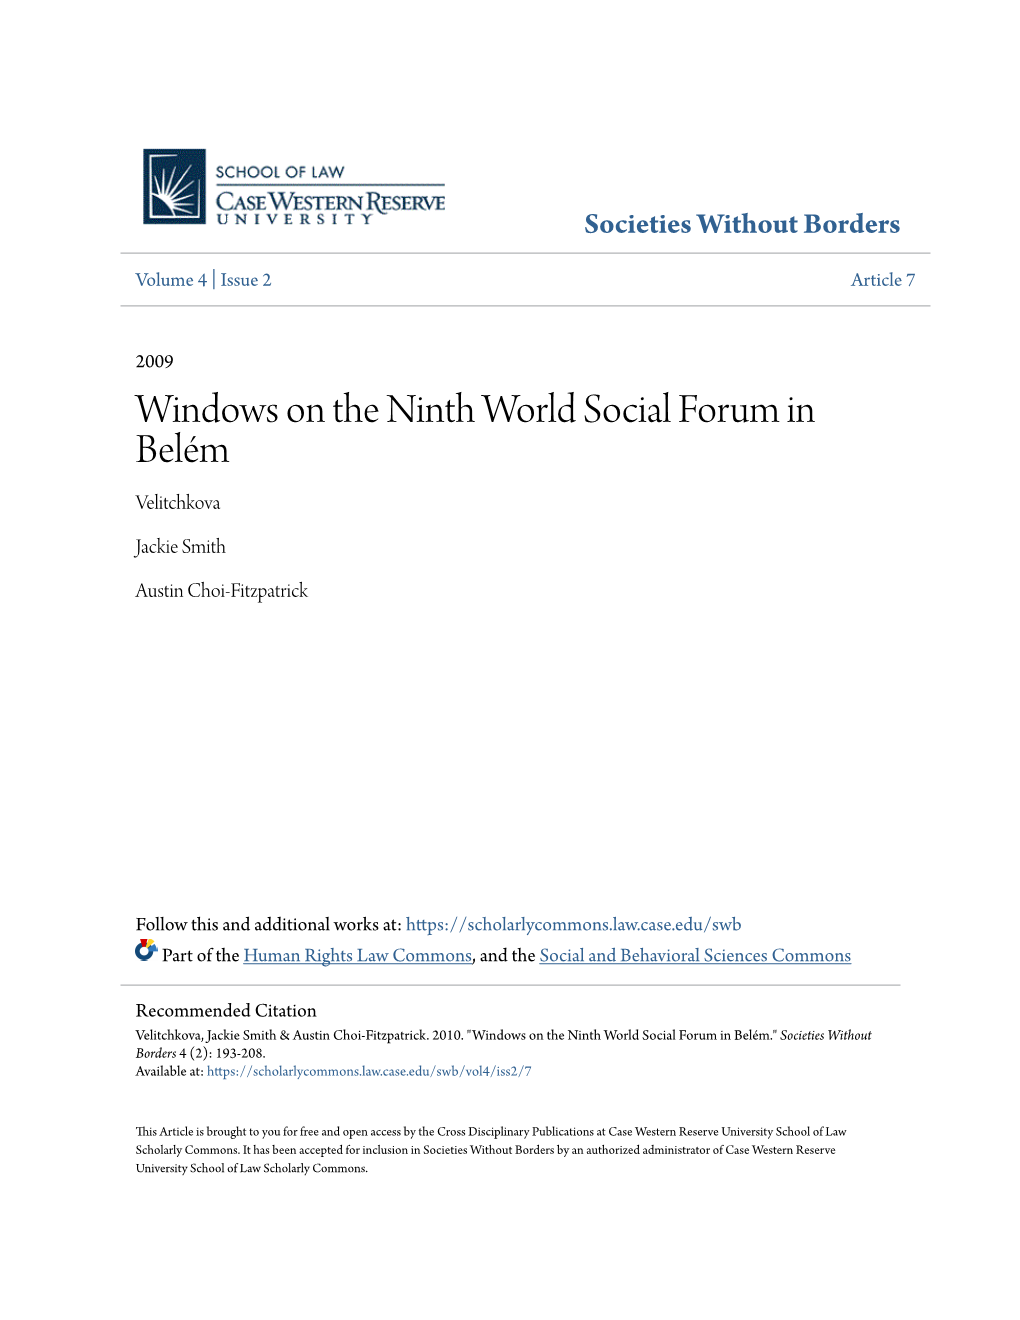 Windows on the Ninth World Social Forum in Belém Velitchkova